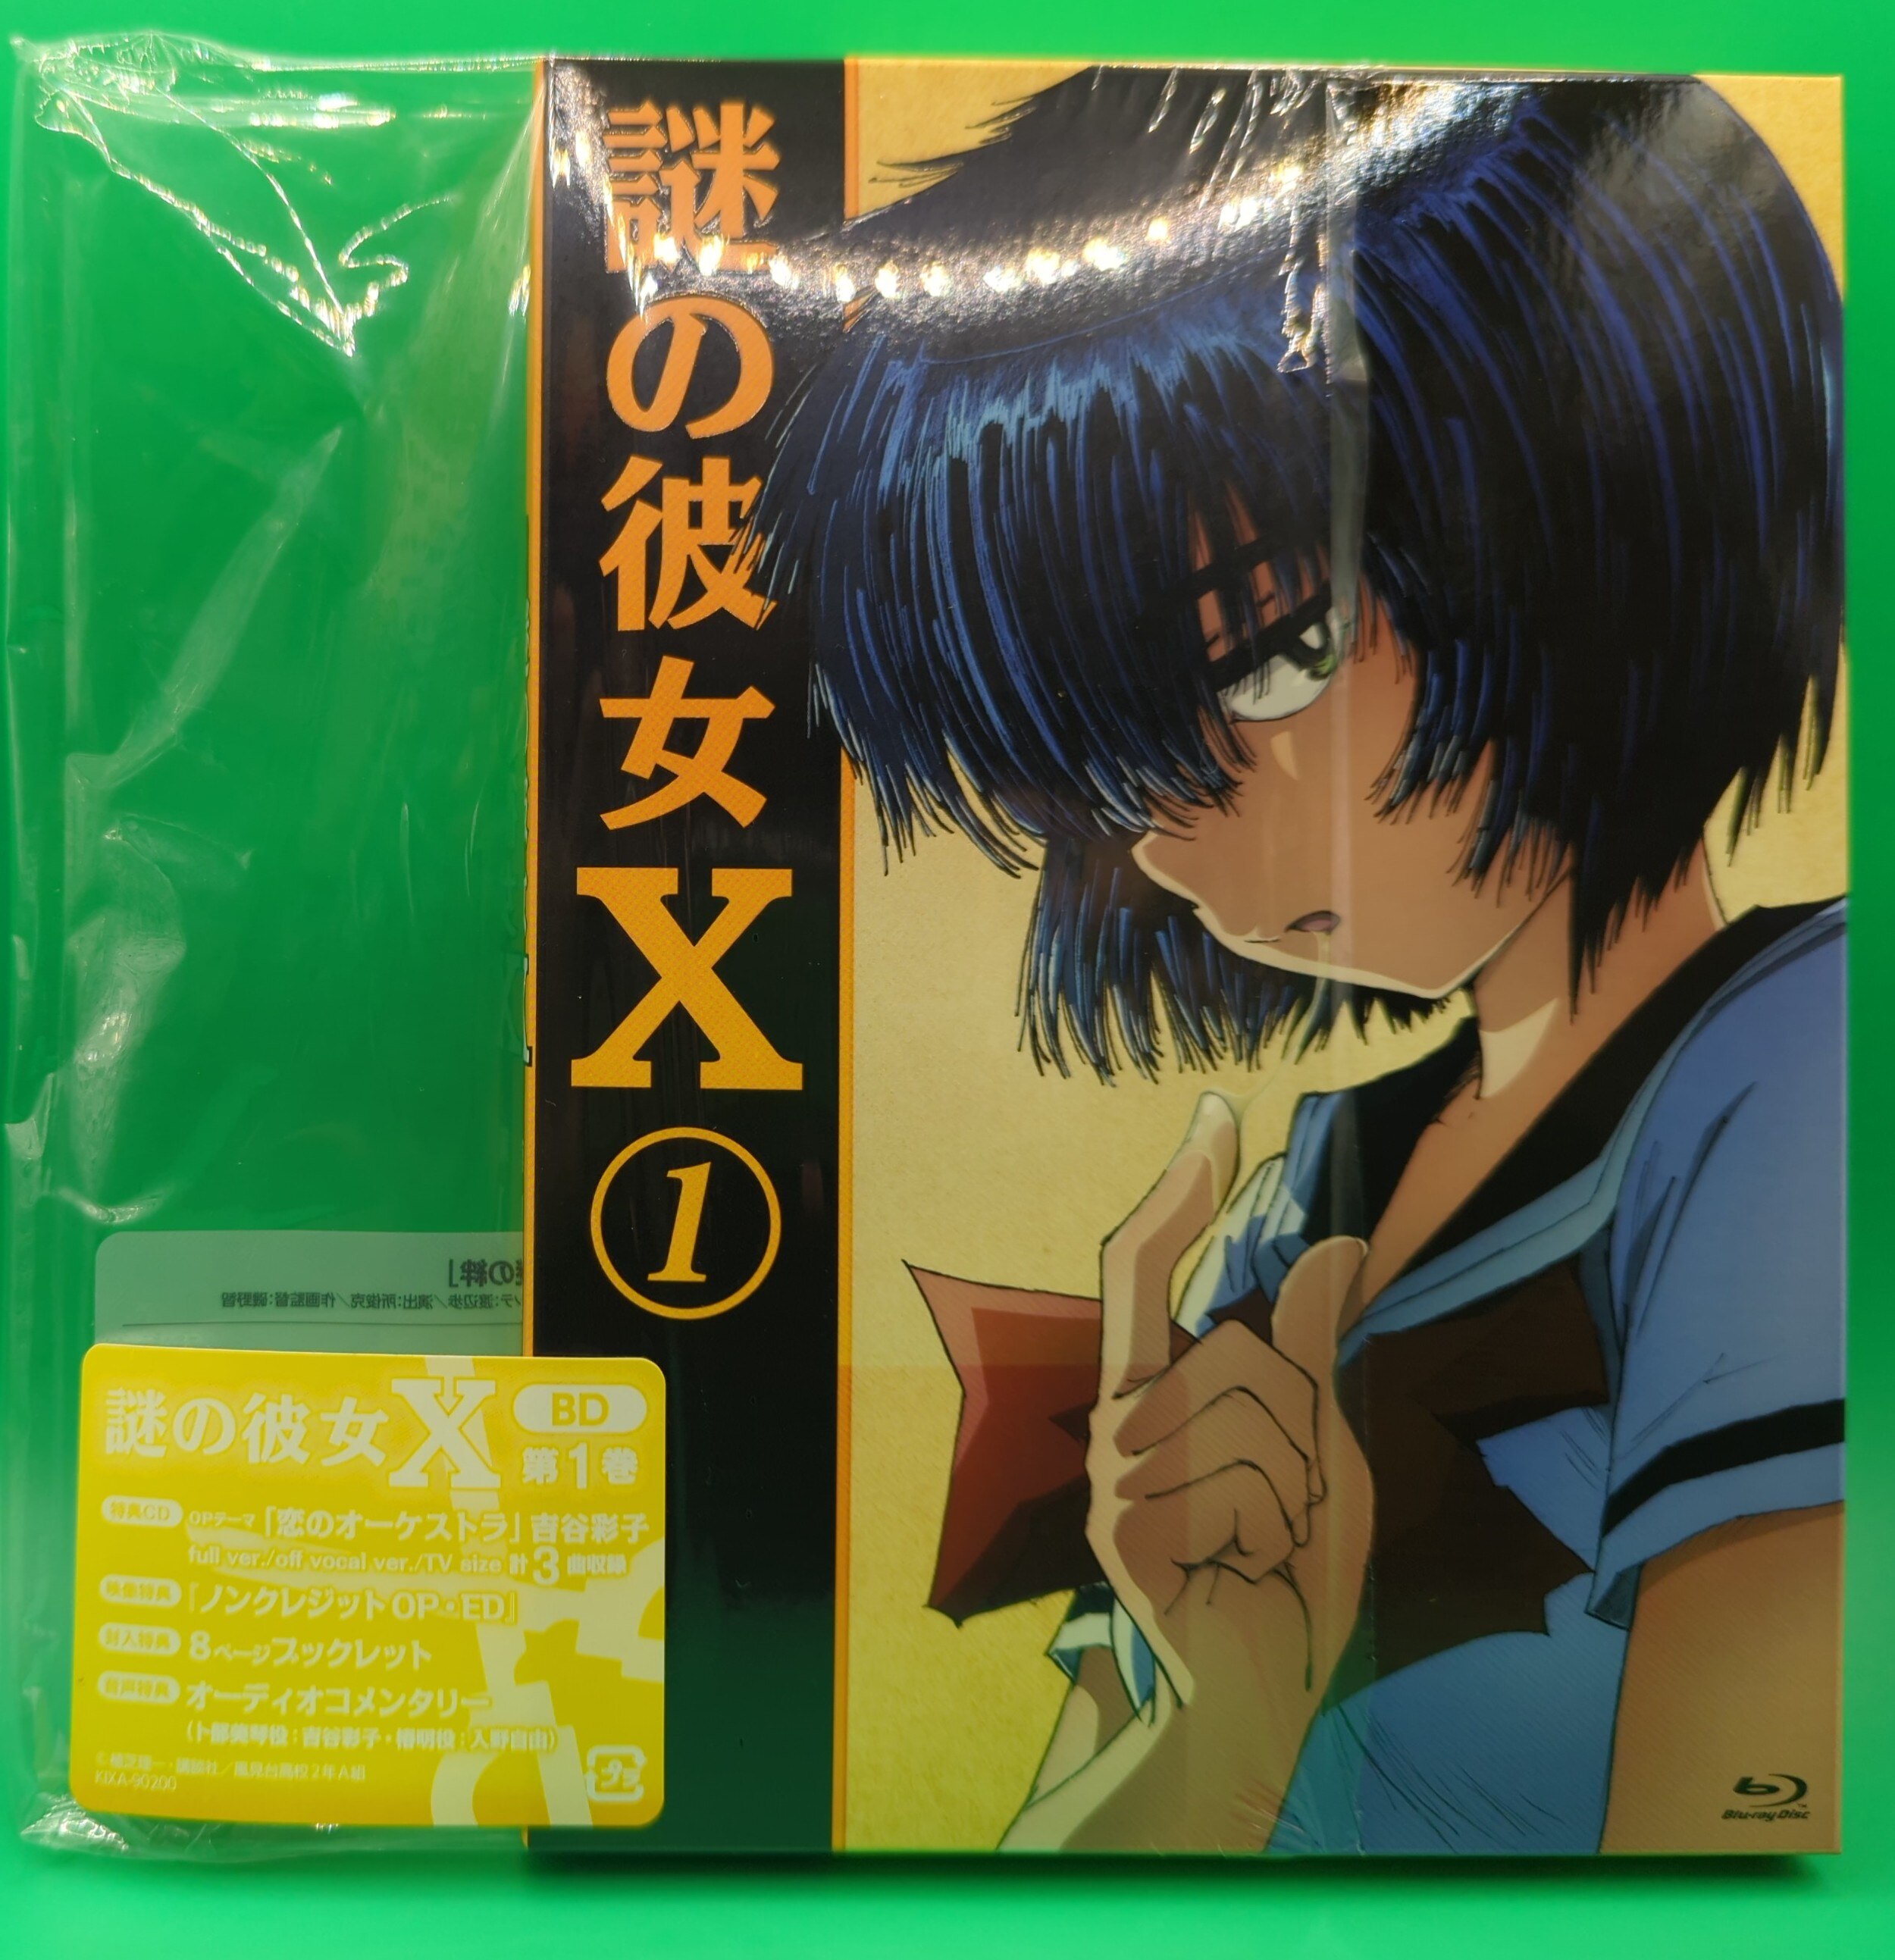 USED Nazo no Kanojo X 1-12+Limited BOX Vol.8 + CD Set Japanese